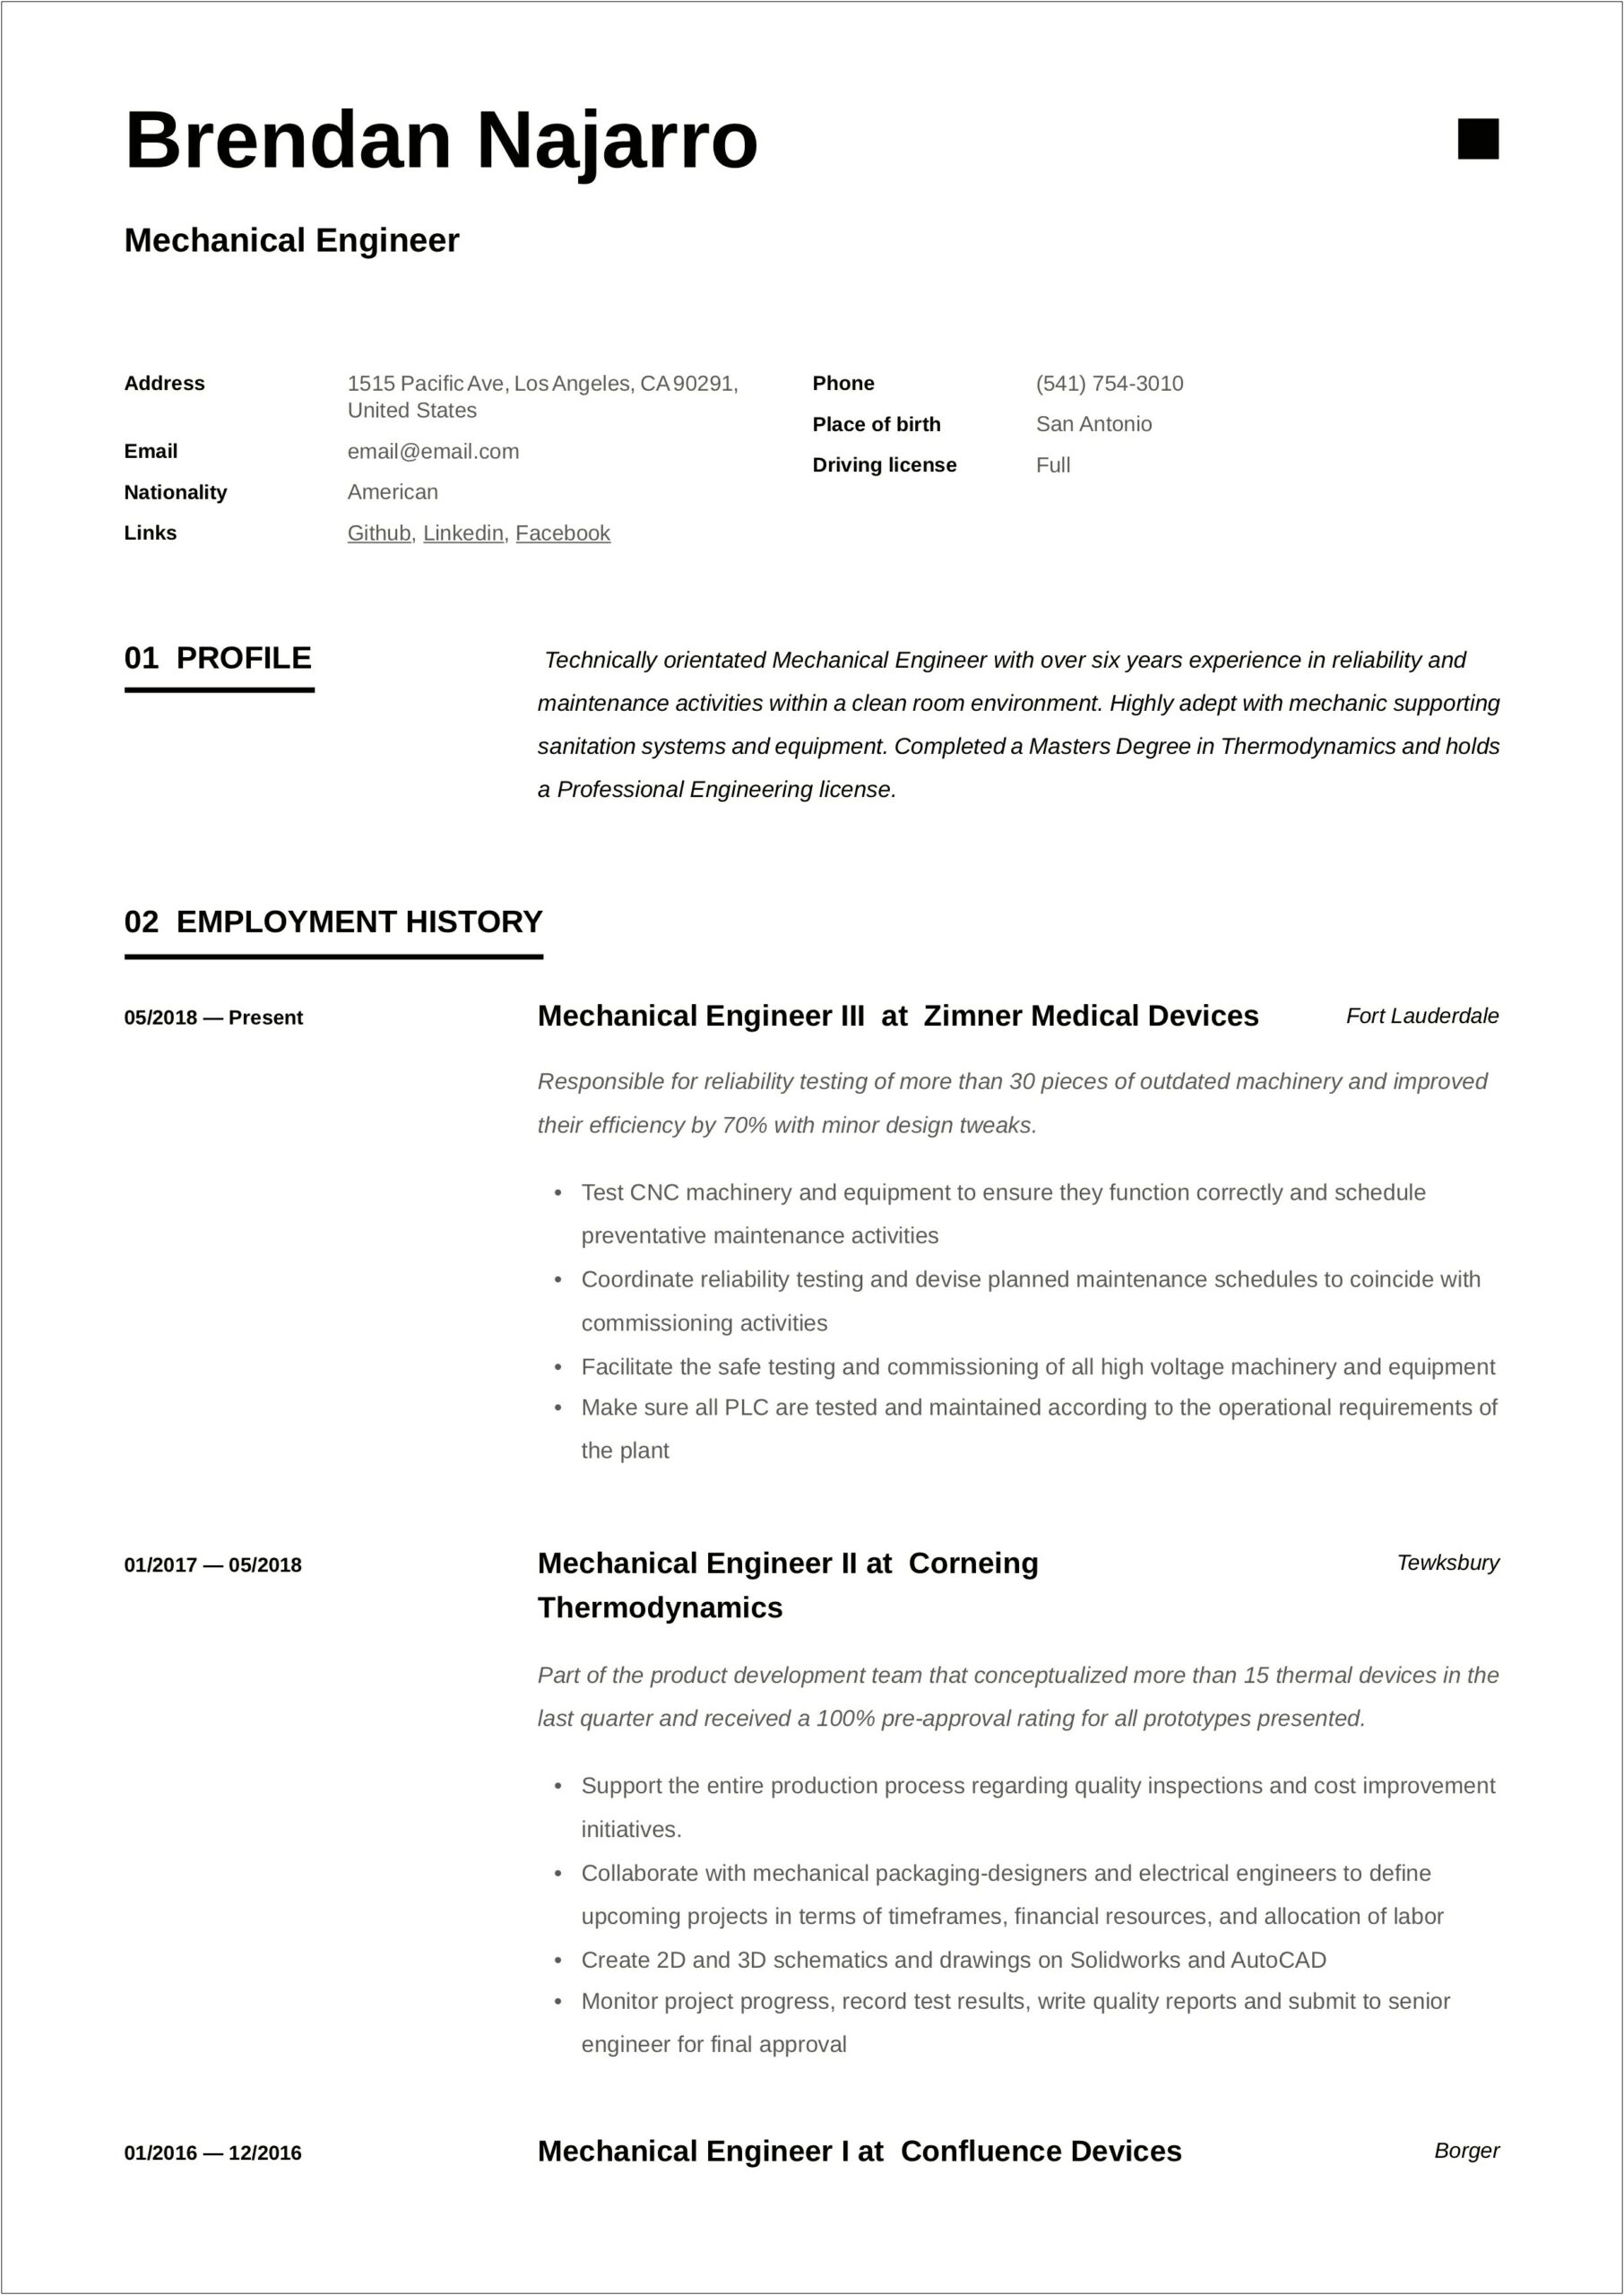 Sample Resume Format For Mechanical Engineer Pdf